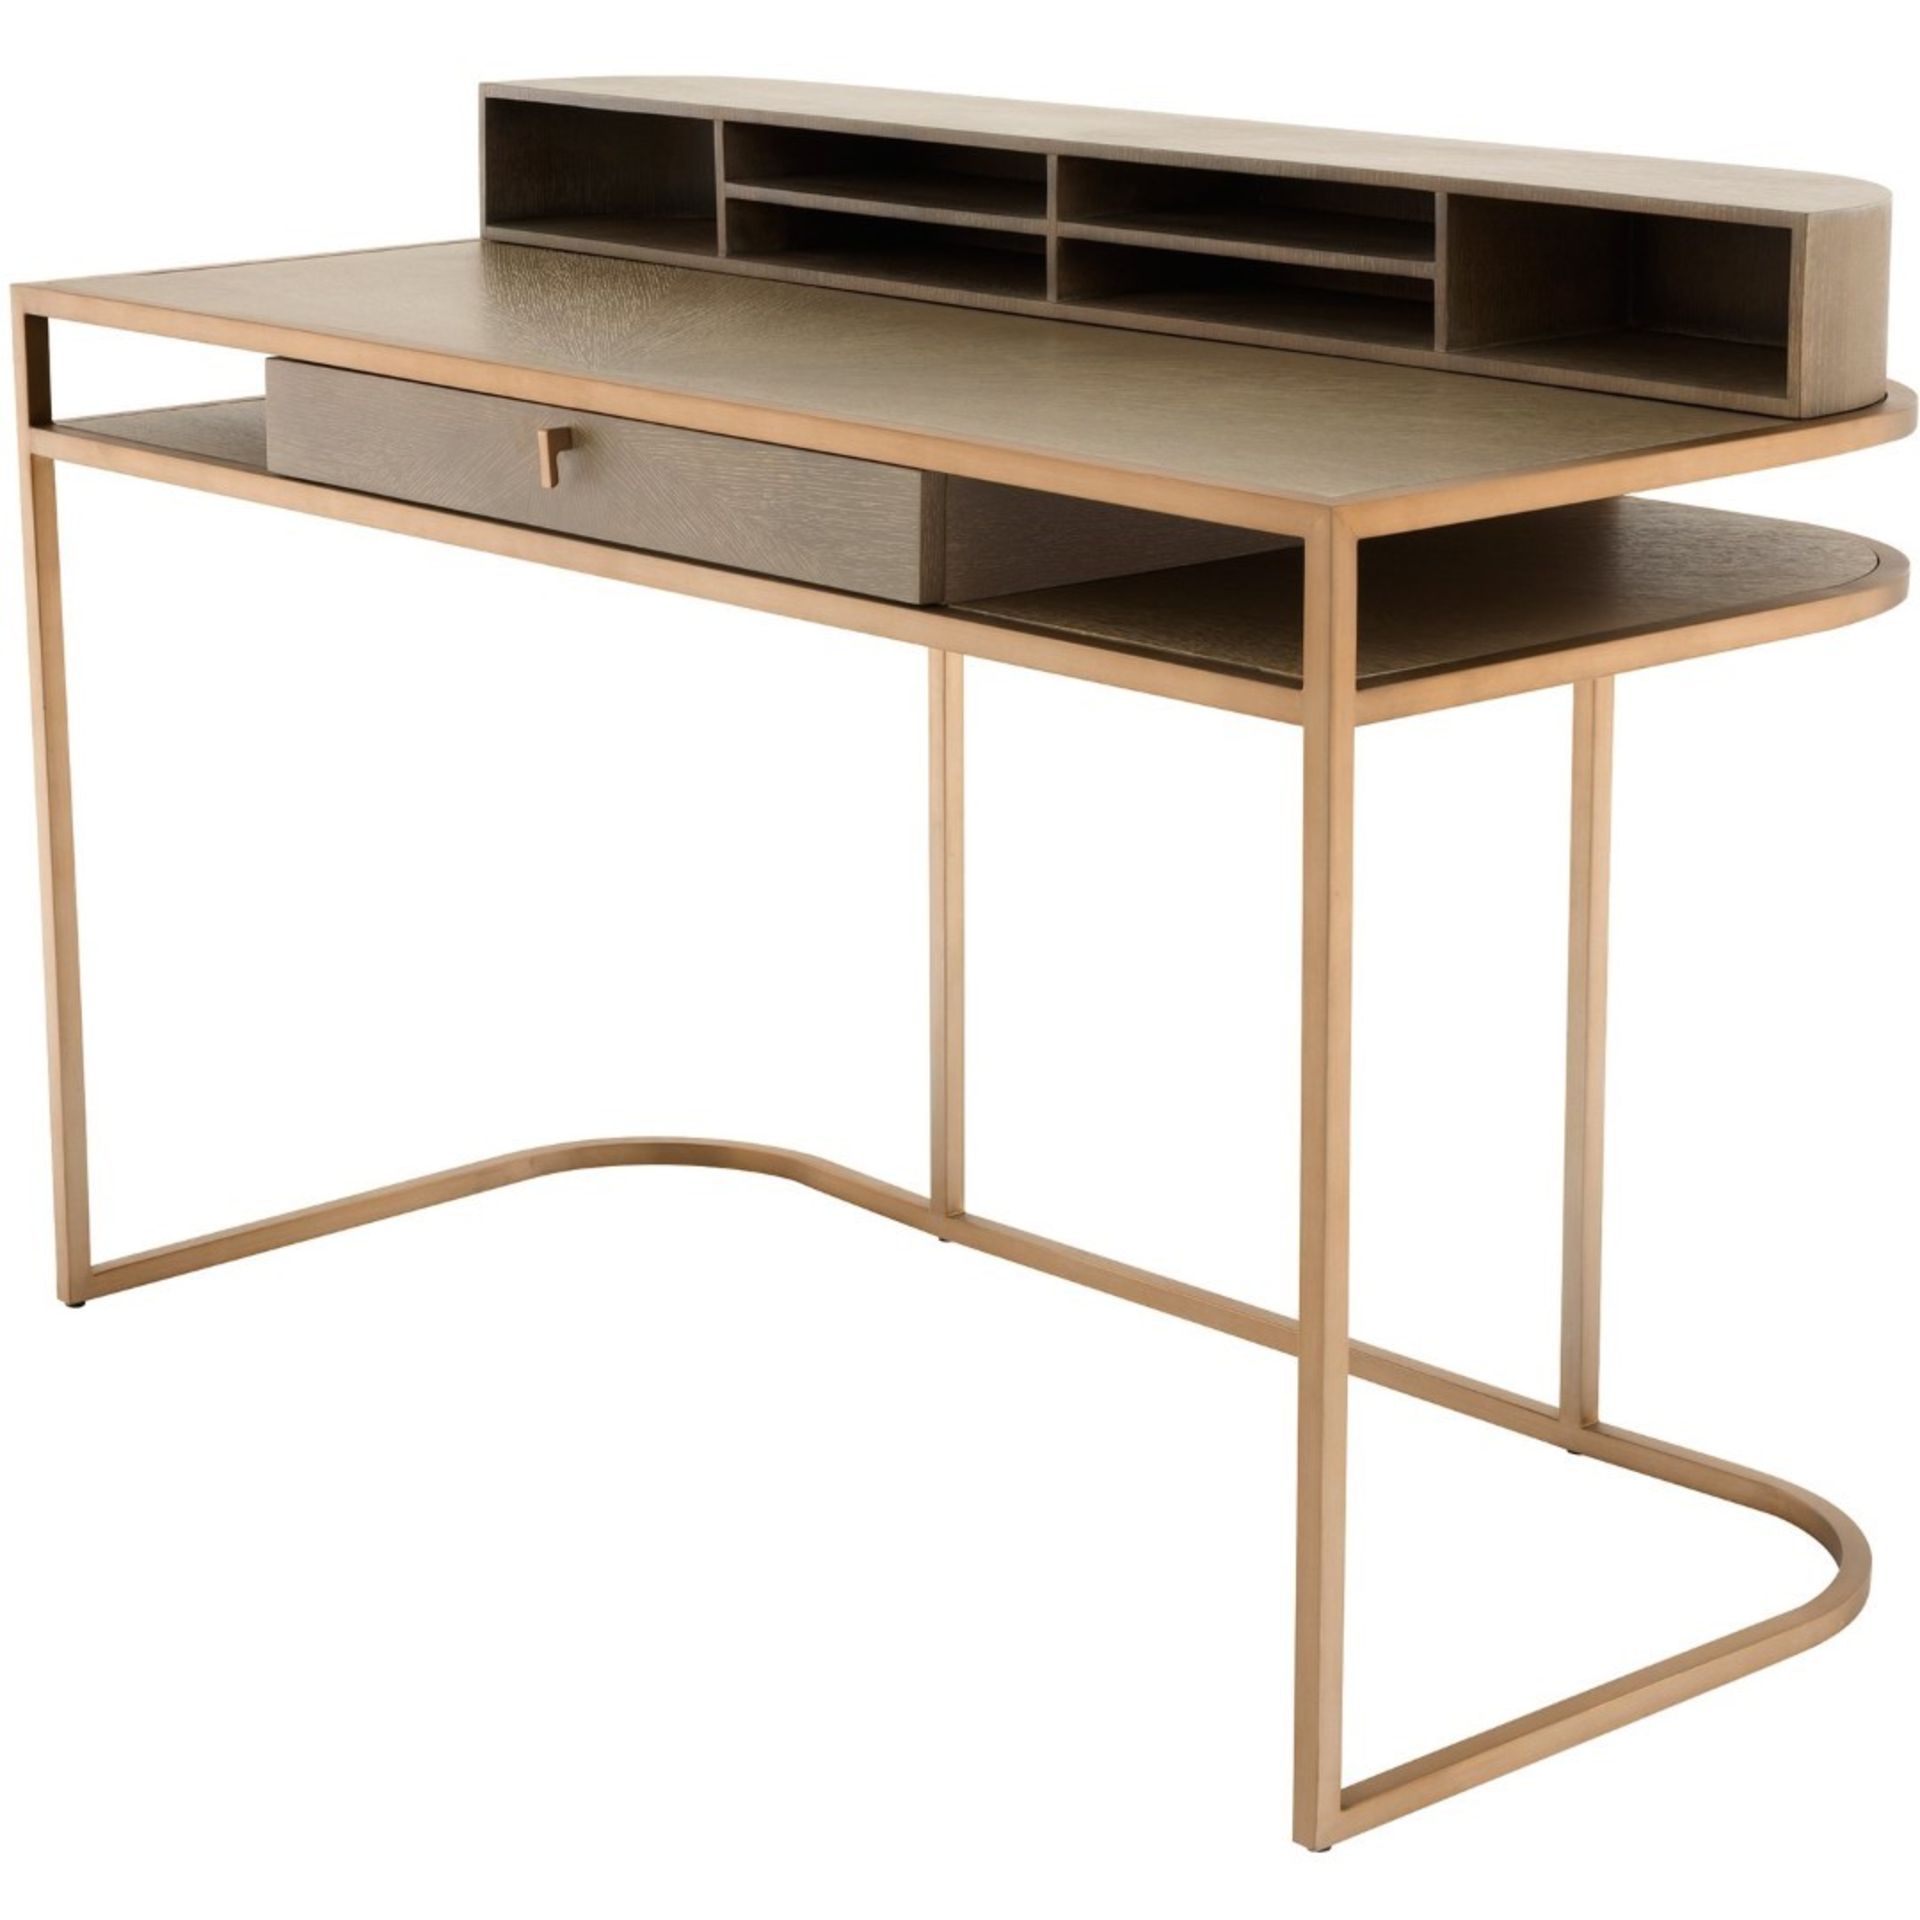 1 x EICHHOLTZ 'Highland' Designer Desk With Washed Oak And Brushed Brass Finishes - RRP £3,519 - Image 2 of 13